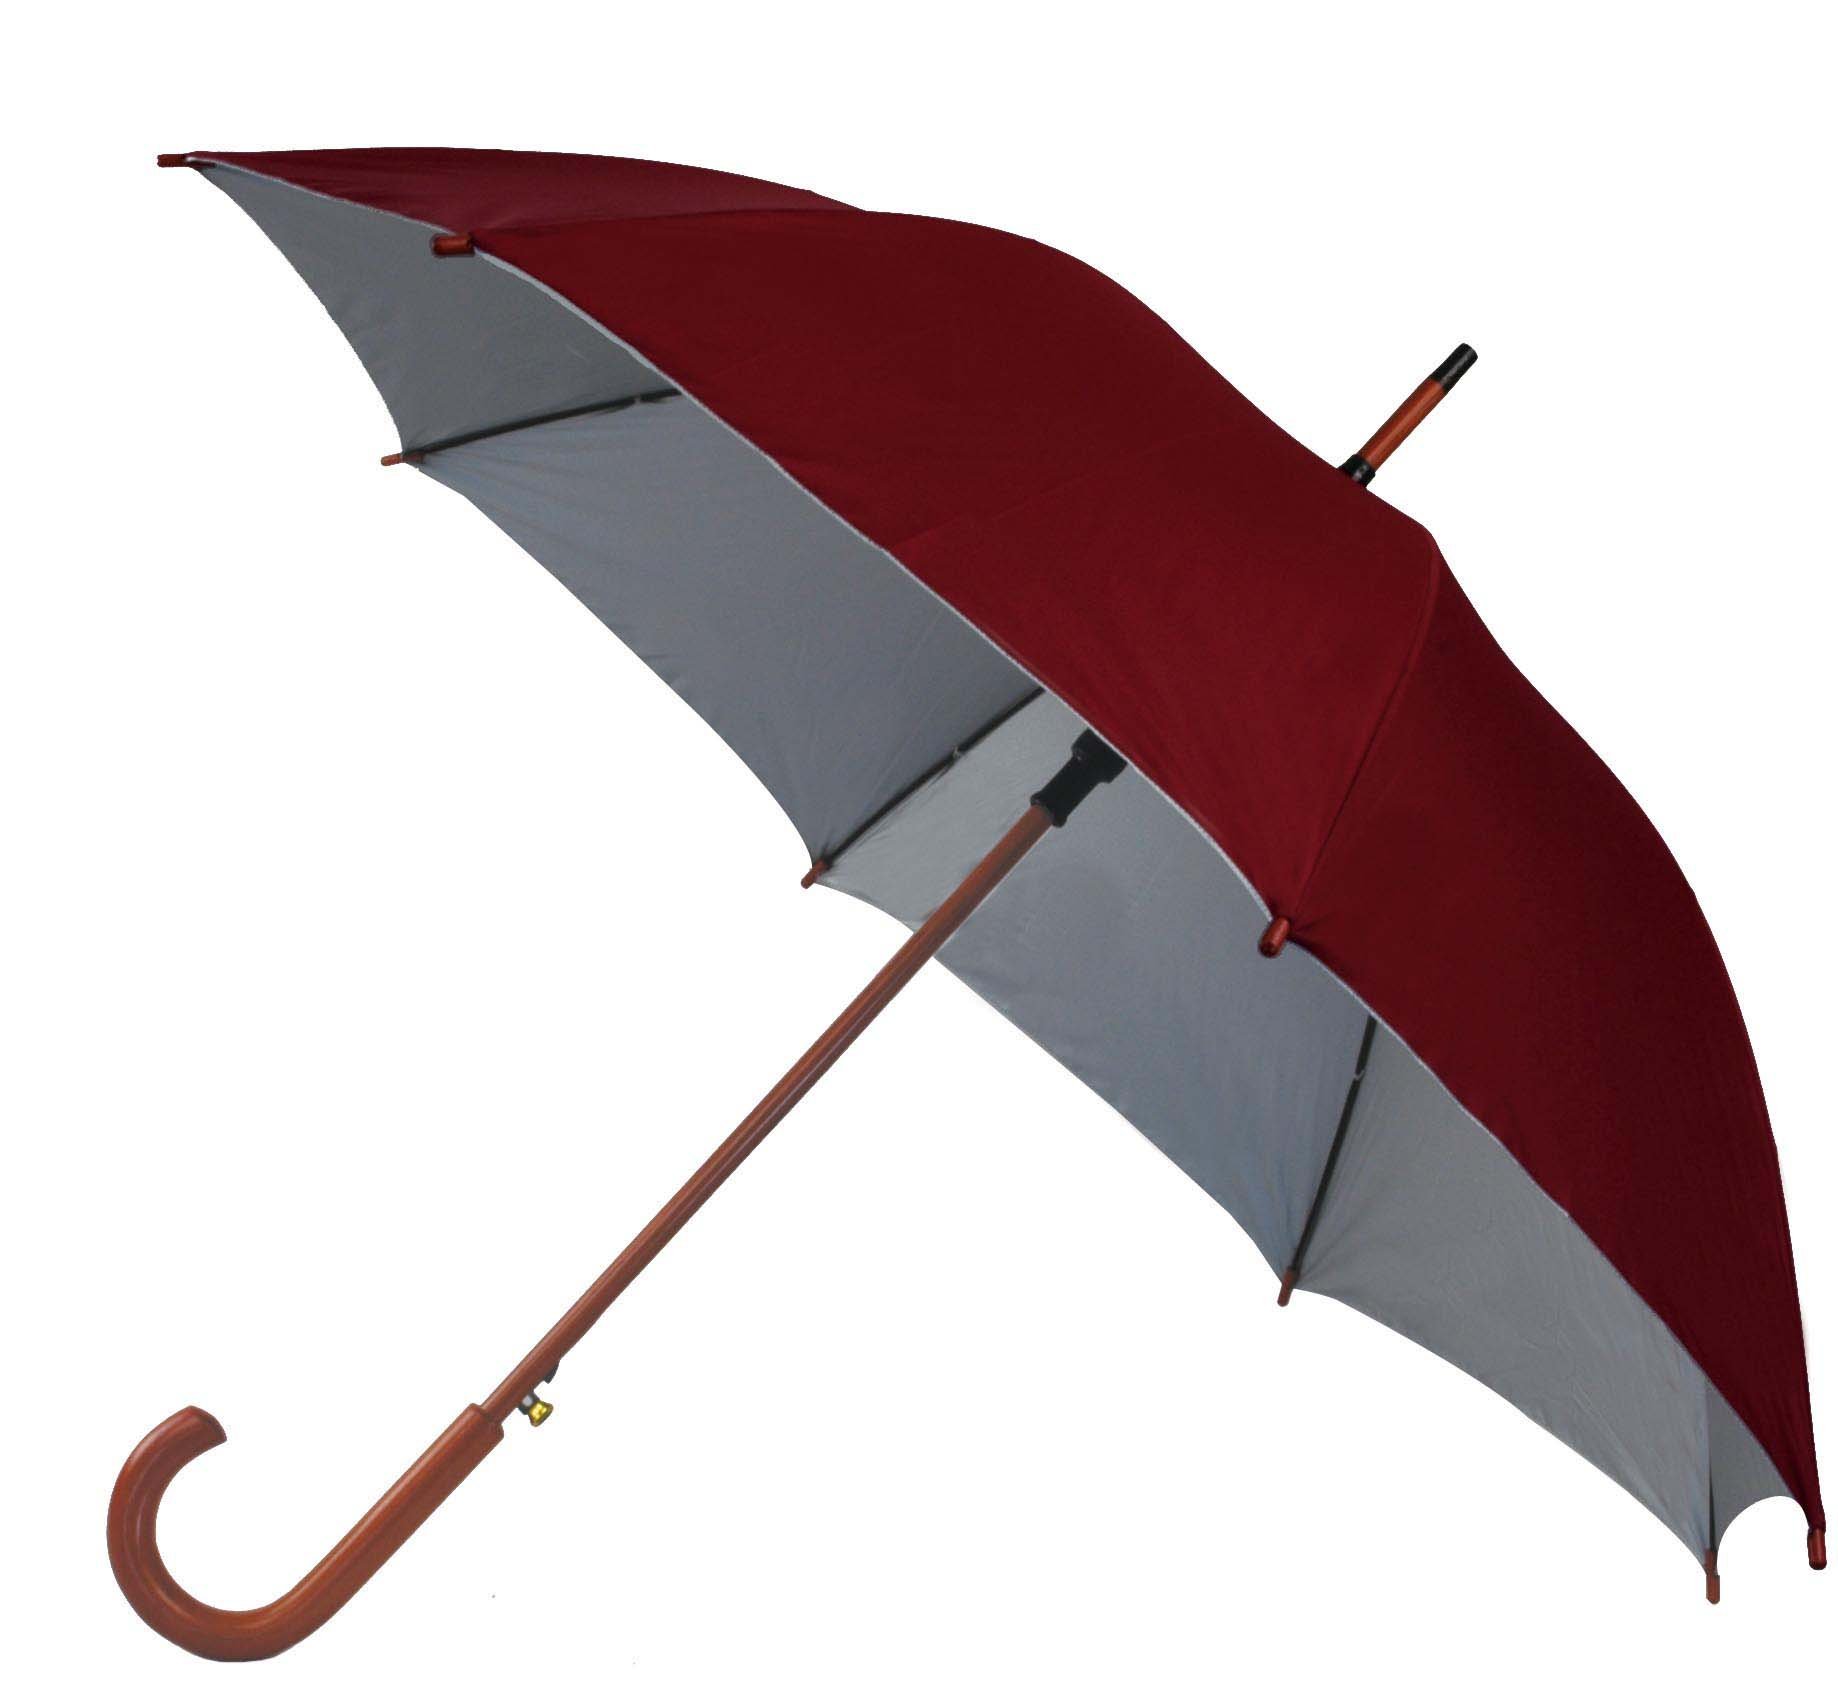  B1303 - The 48" Auto Open Umbrella with Hook Handle